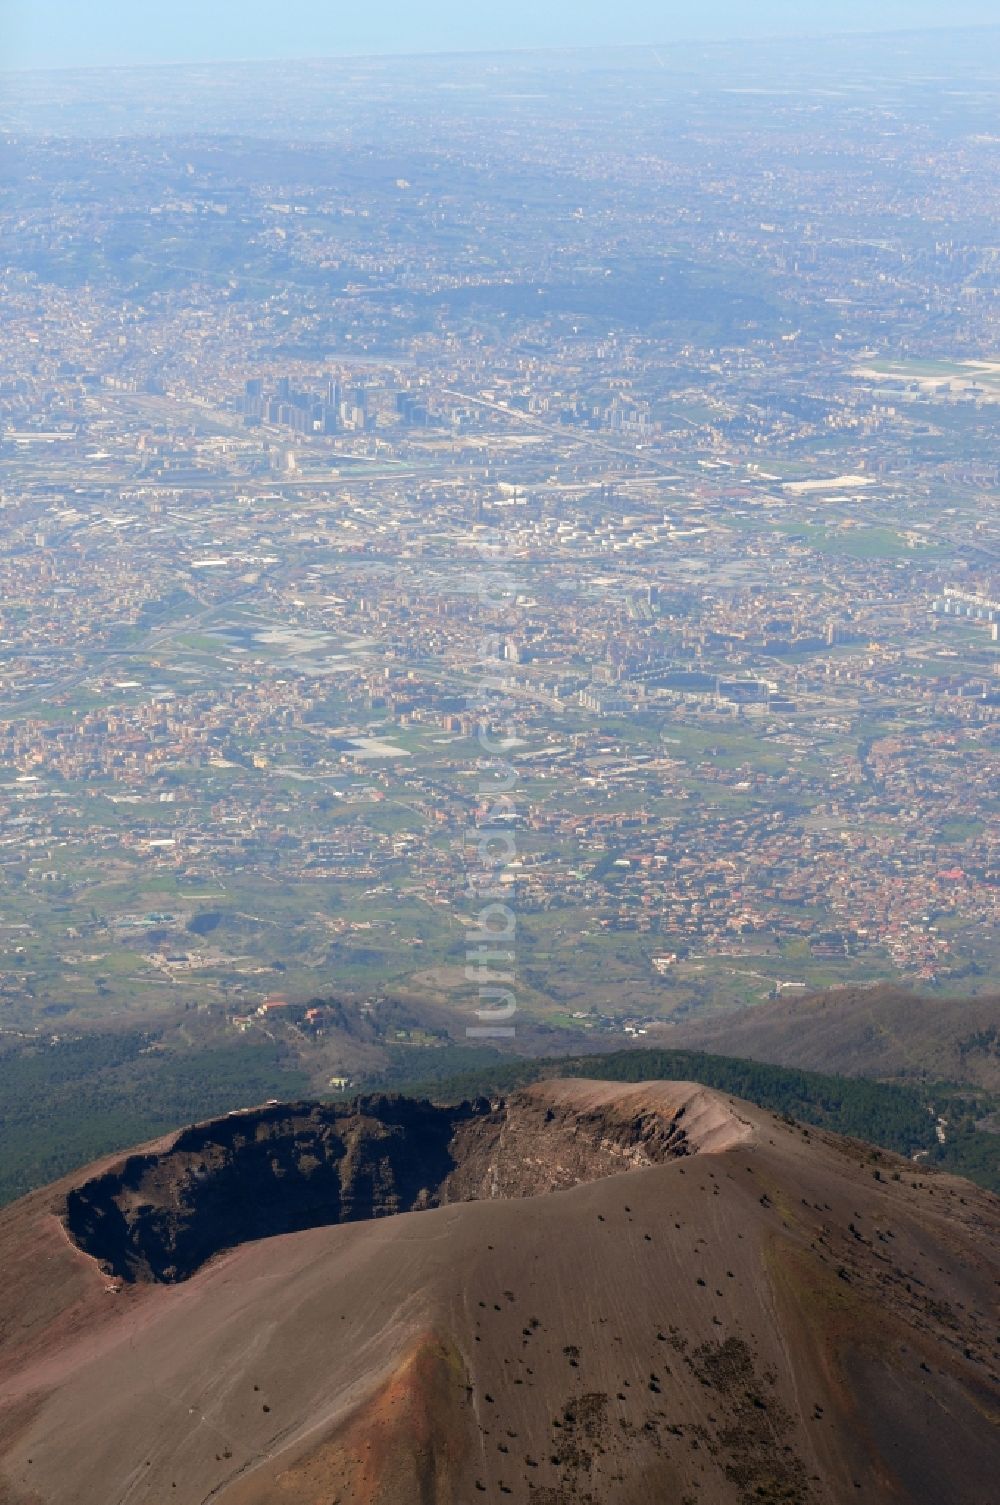 Neapel von oben - Krater im Naturschutzgebiet / Reservat am Vulkan Vesuv bei Neapel in Italien